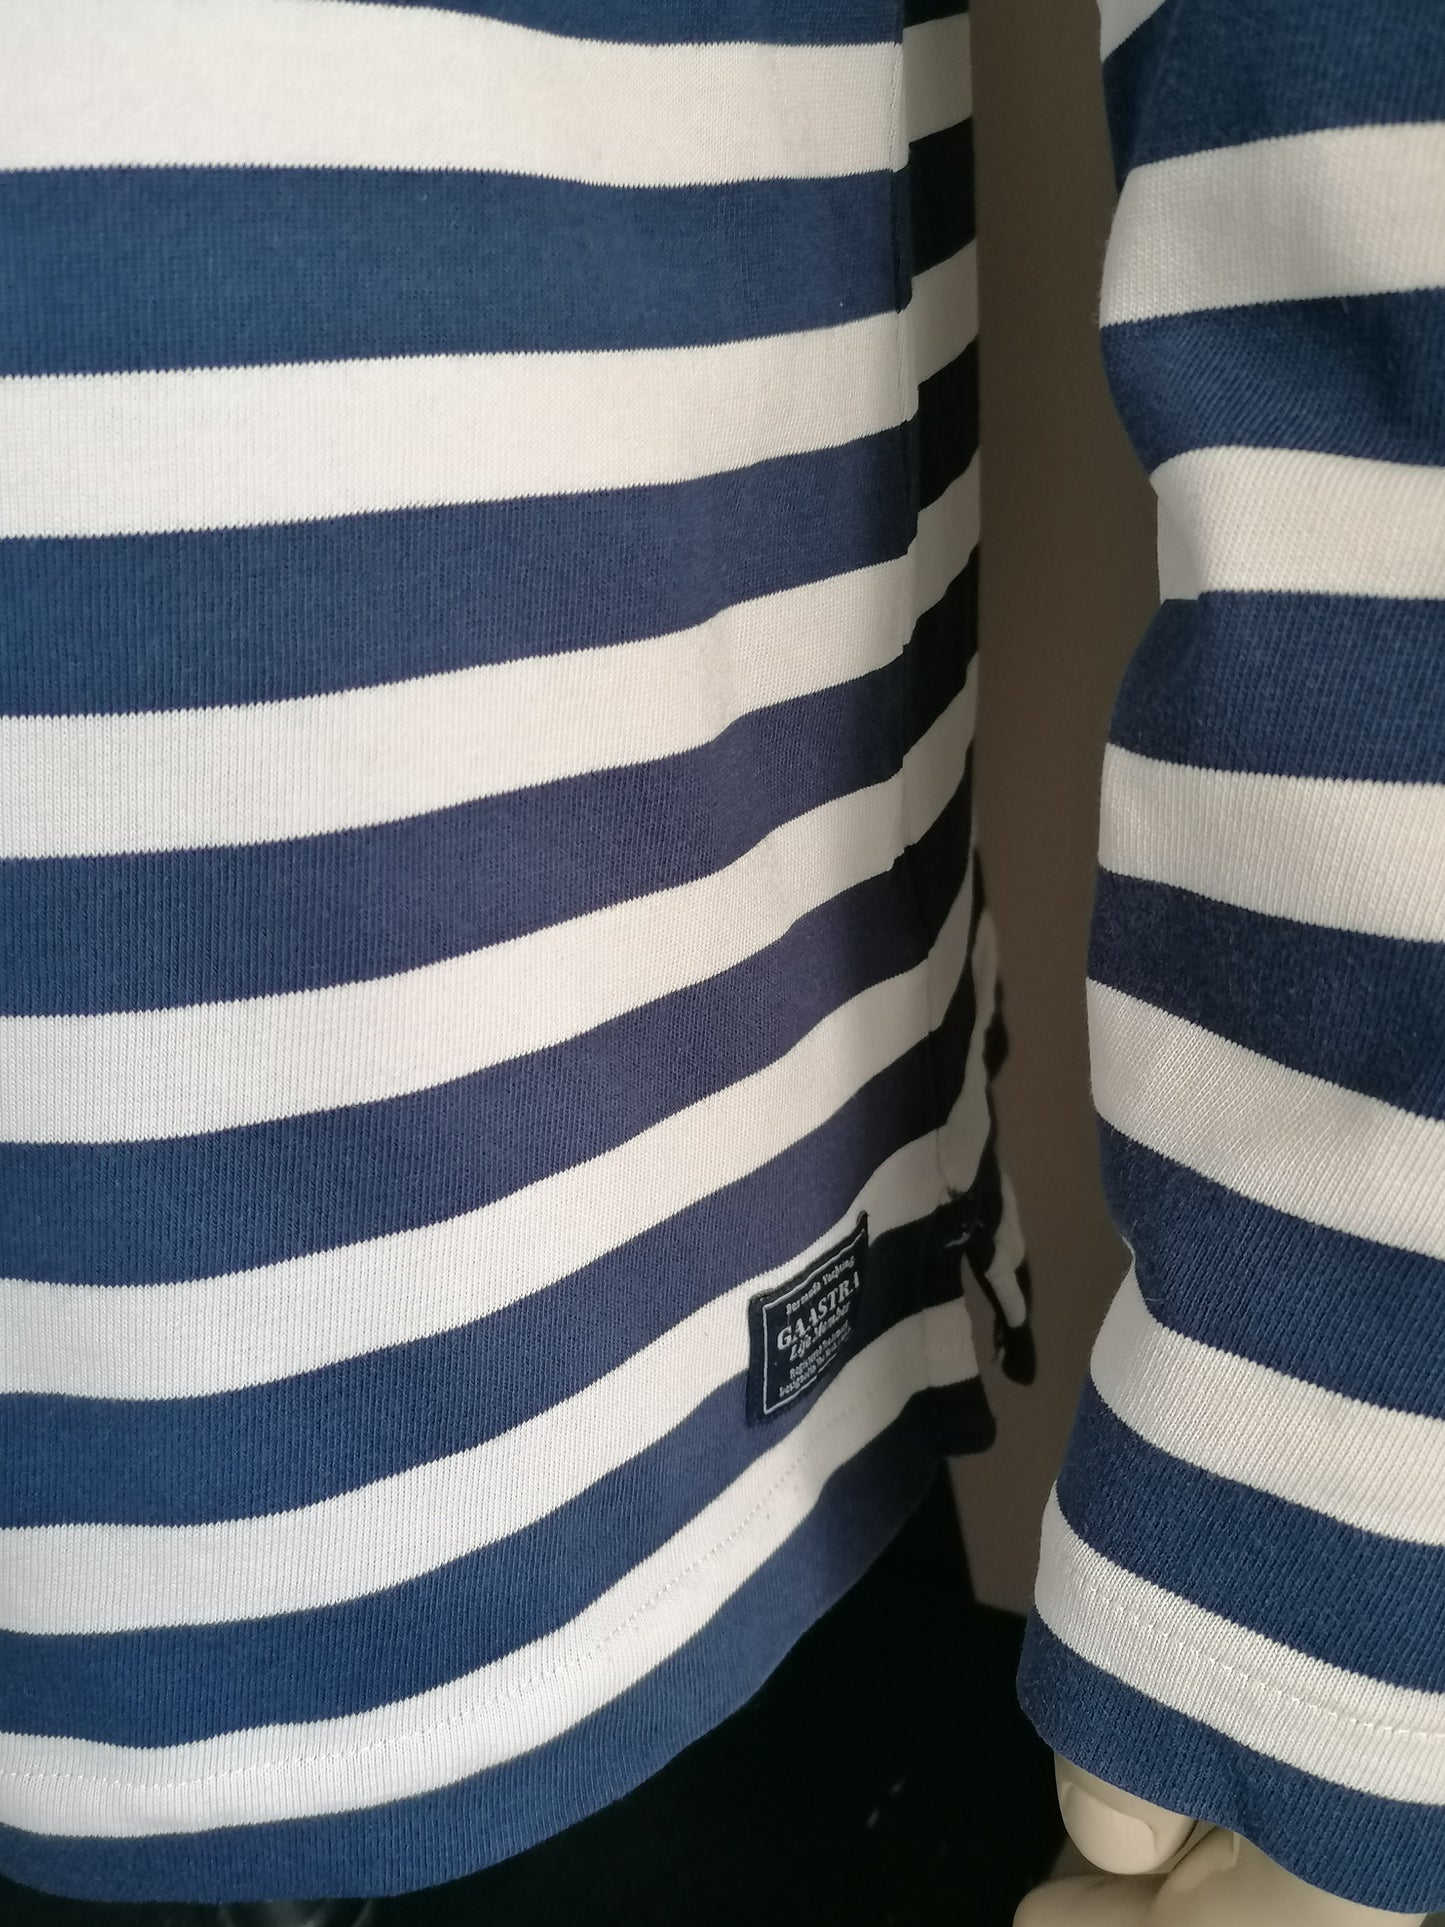 Gaastra casual sweater. Beige blue striped. Size XL.